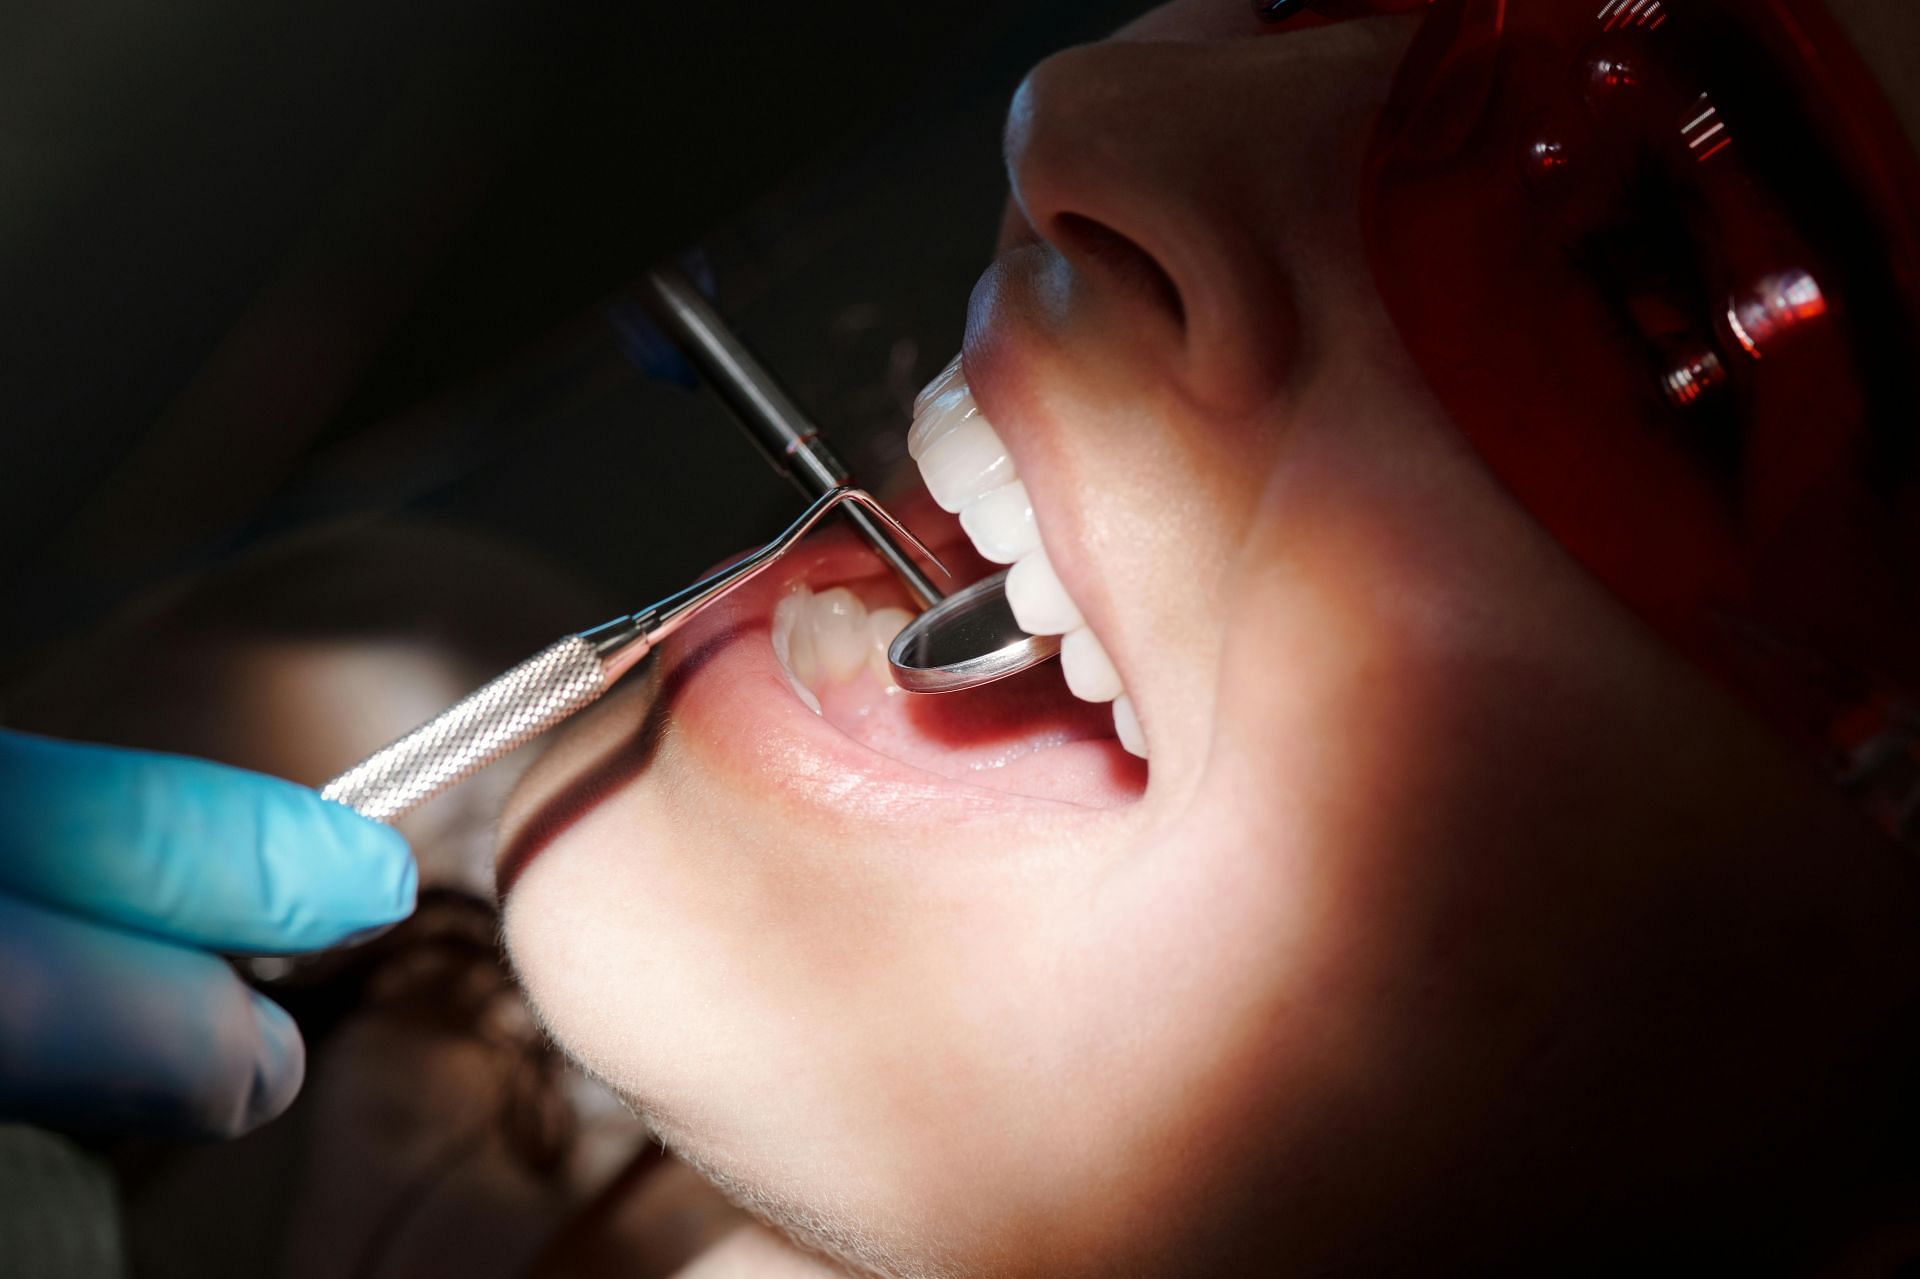 Dental hygiene benefits (image sourced via Pexels / Photo by cedric)